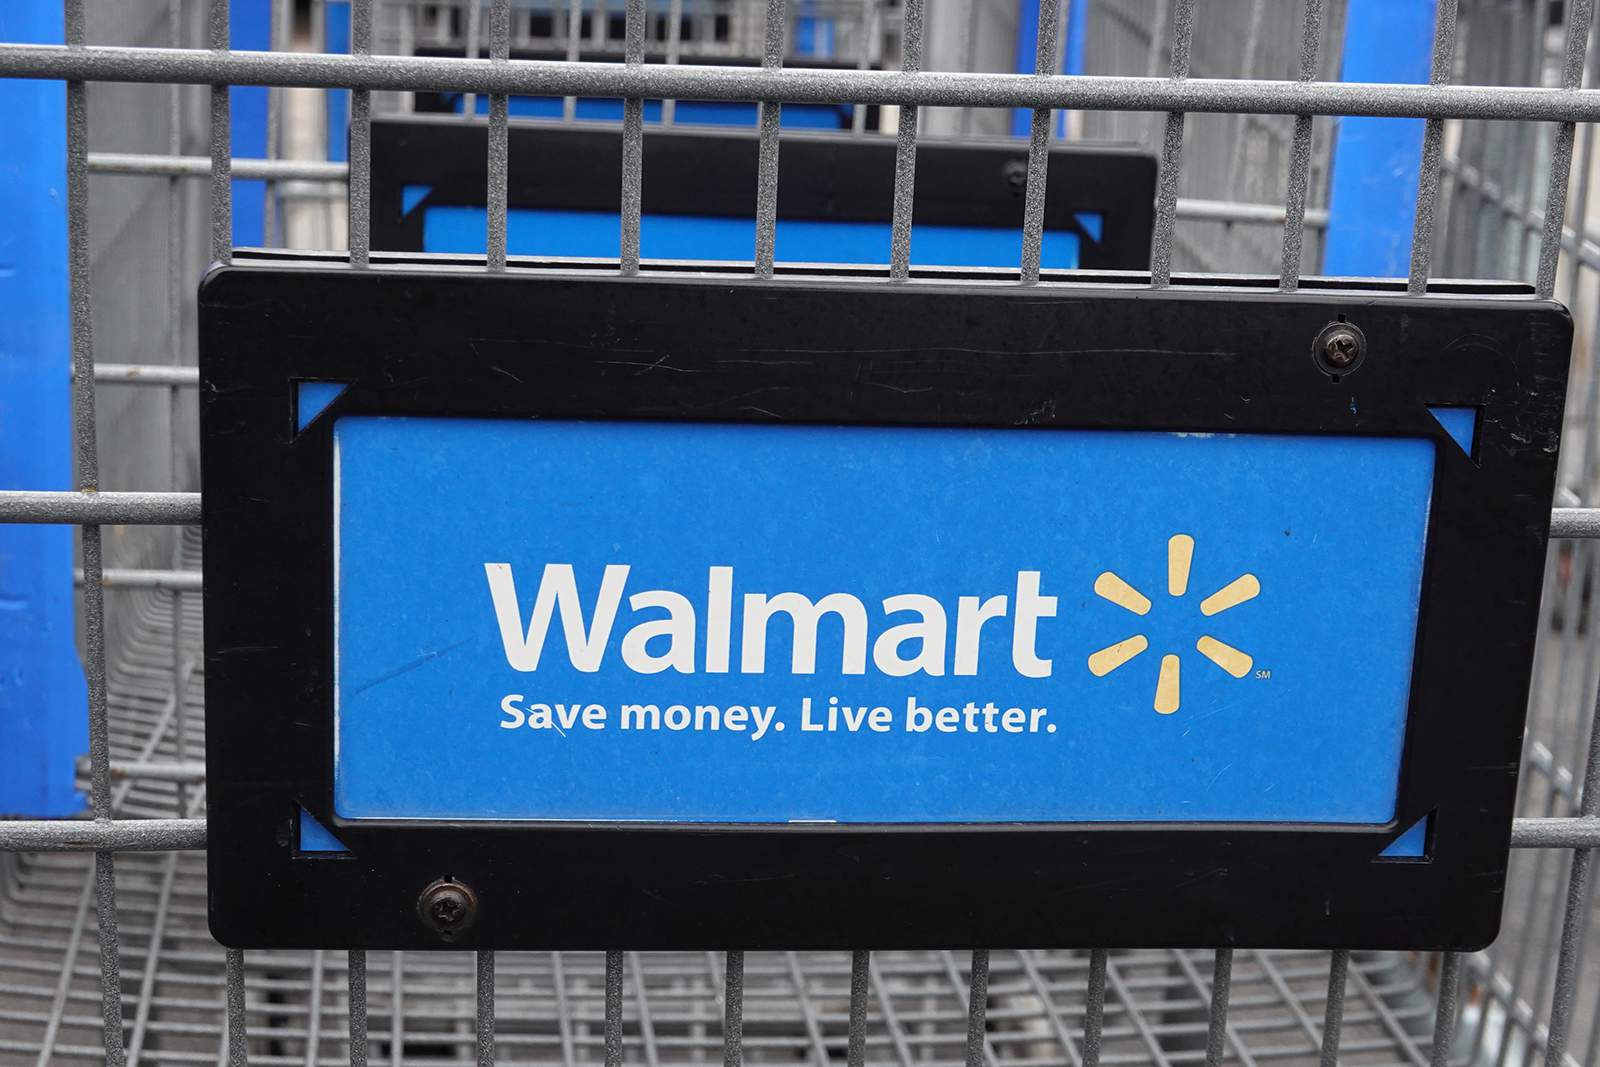 Walmart gets backlash over T-shirts with ‘All Lives Matter’ and ‘Irish Lives Matter’ slogans